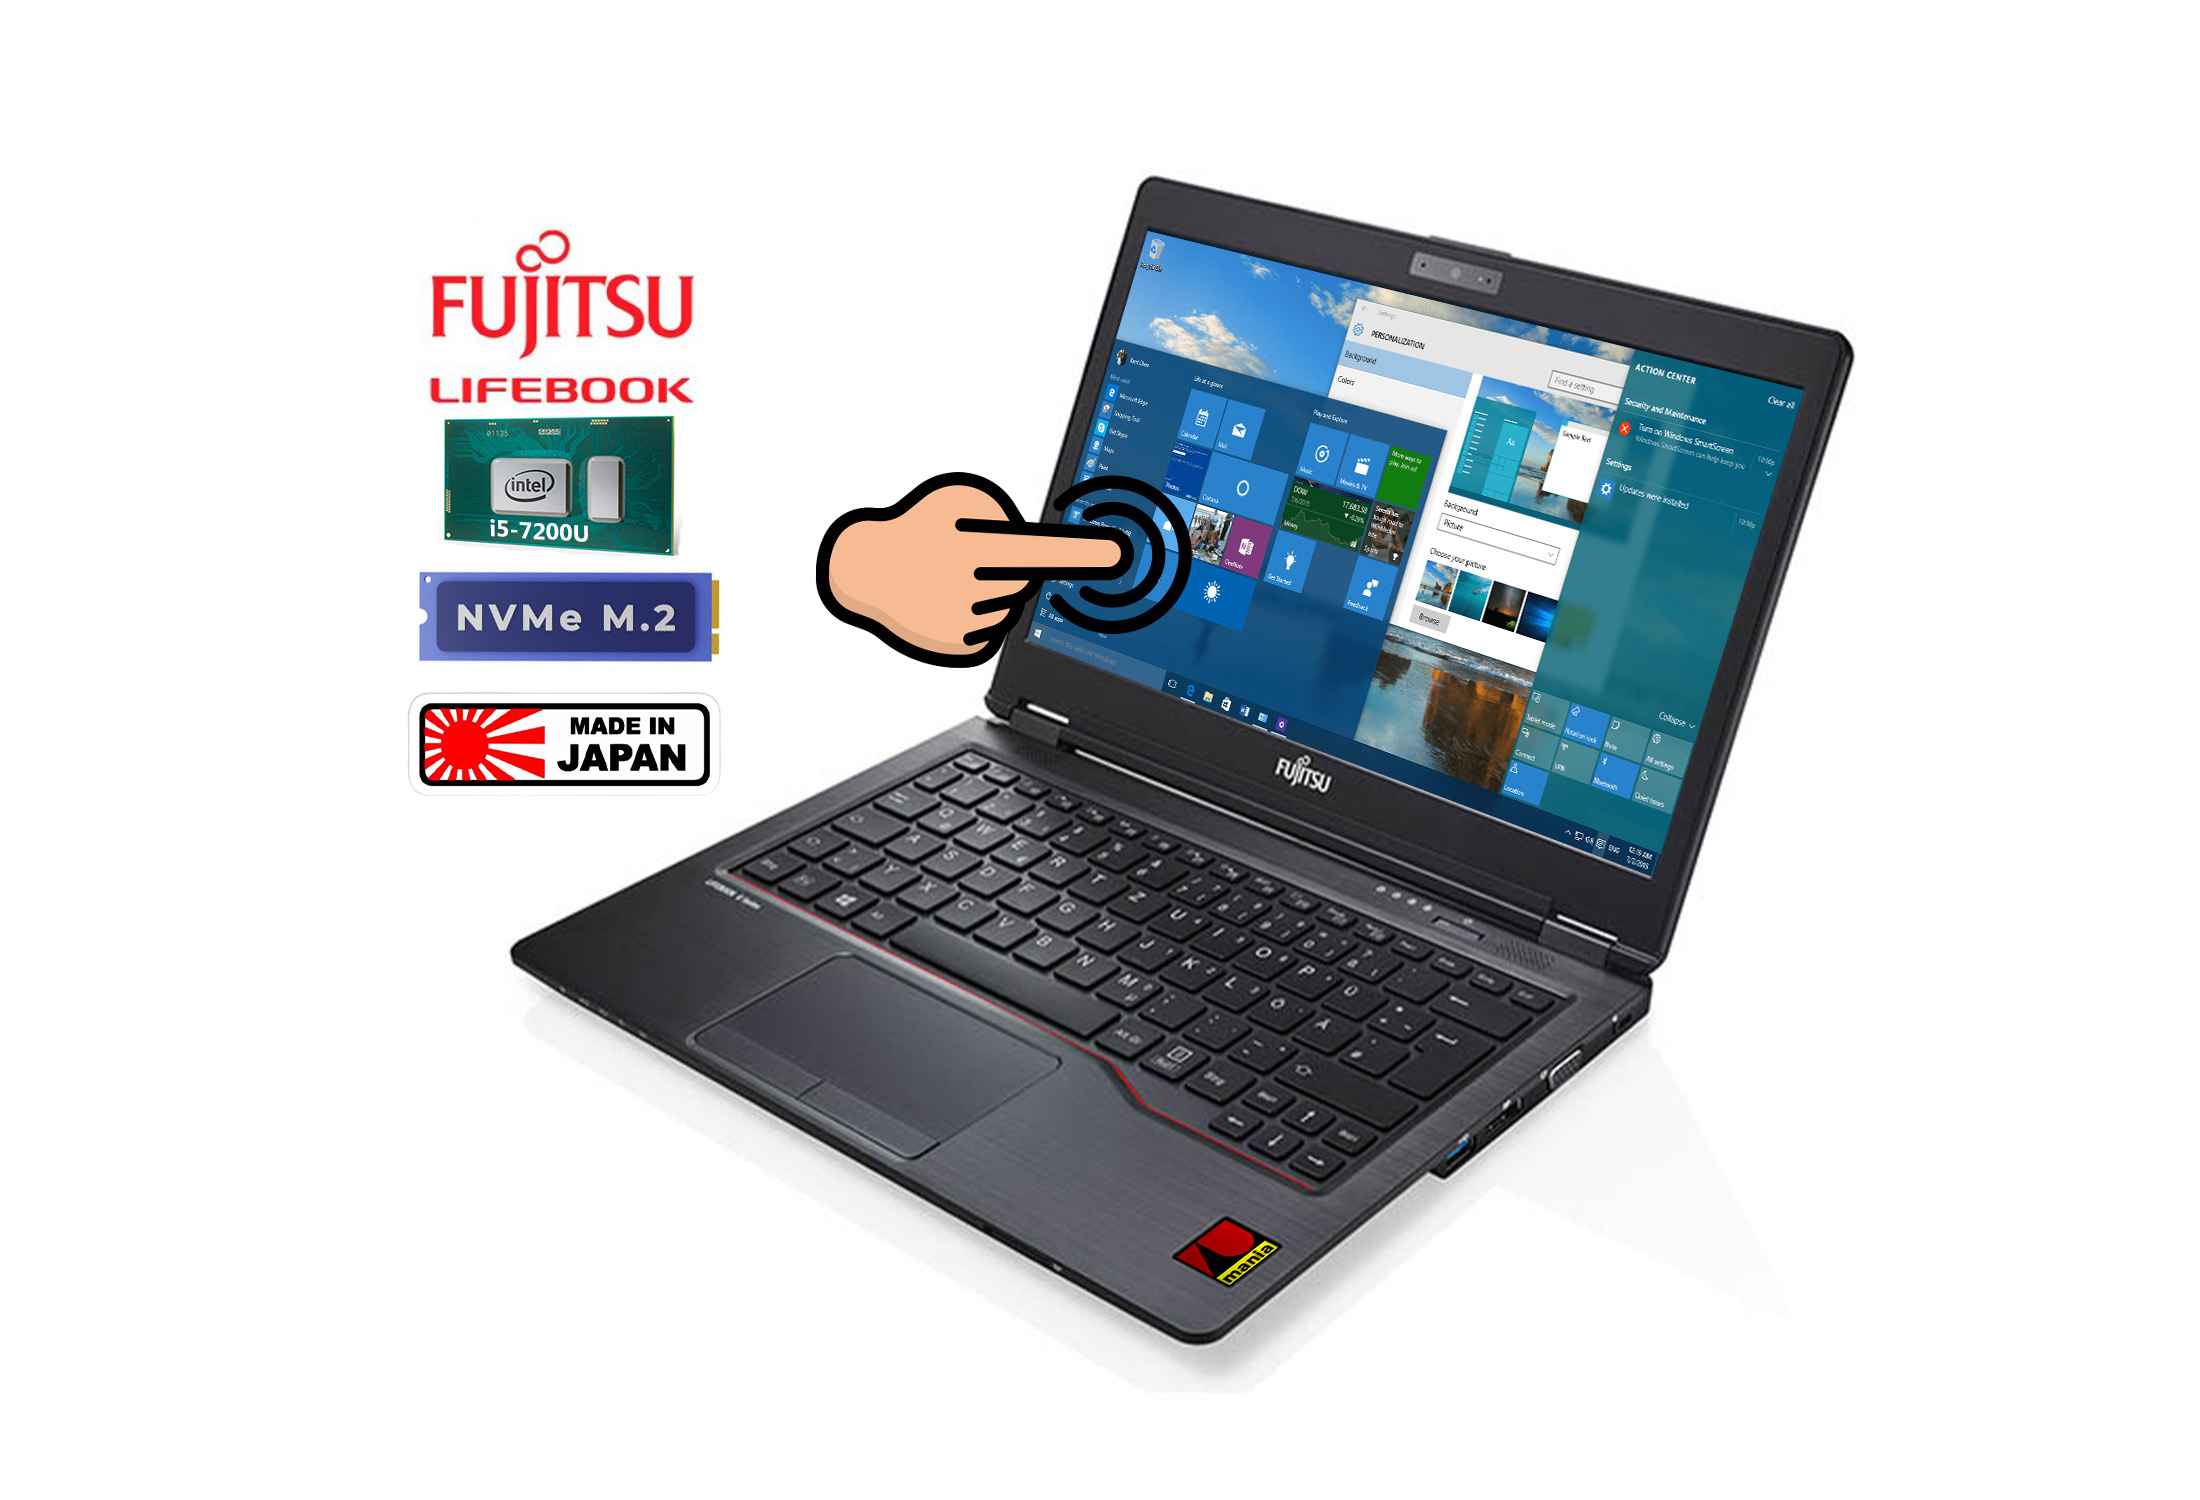 Fujitsu Lifebook U727 i5-7200U NVMe IPS Touch Camera Not Charging-jkcFN.jpeg